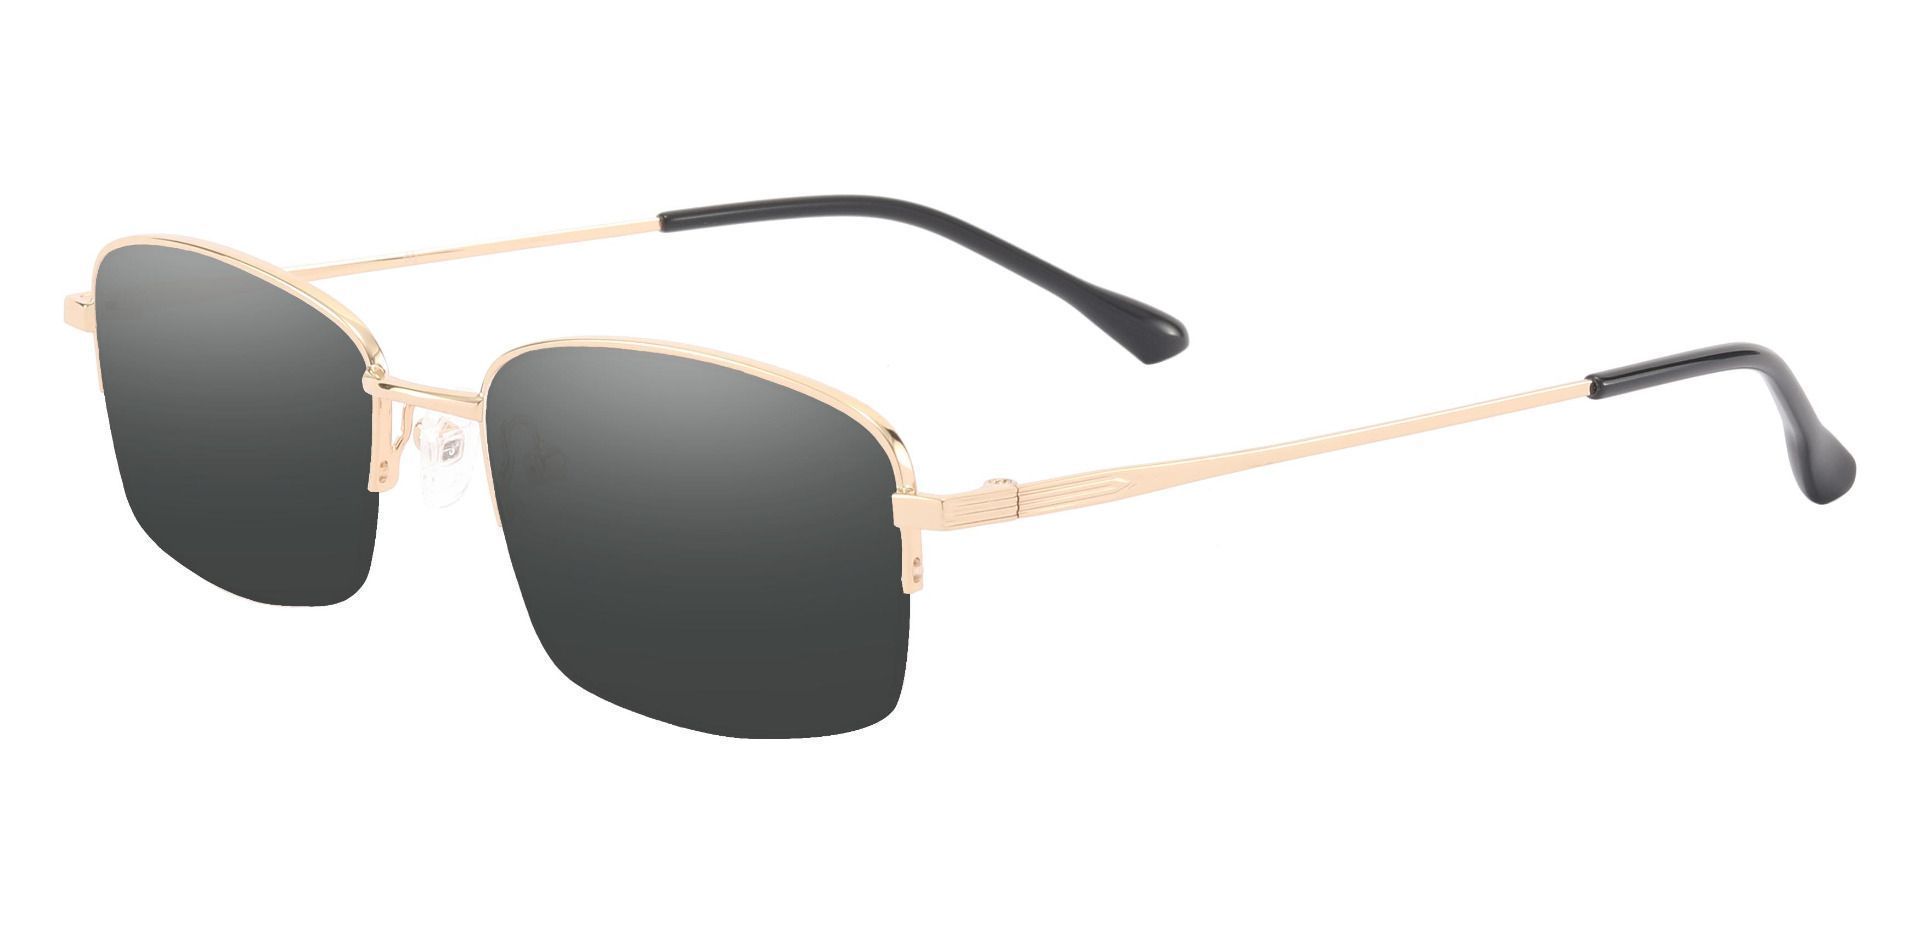 Lima Rectangle Prescription Sunglasses - Gold Frame With Gray Lenses